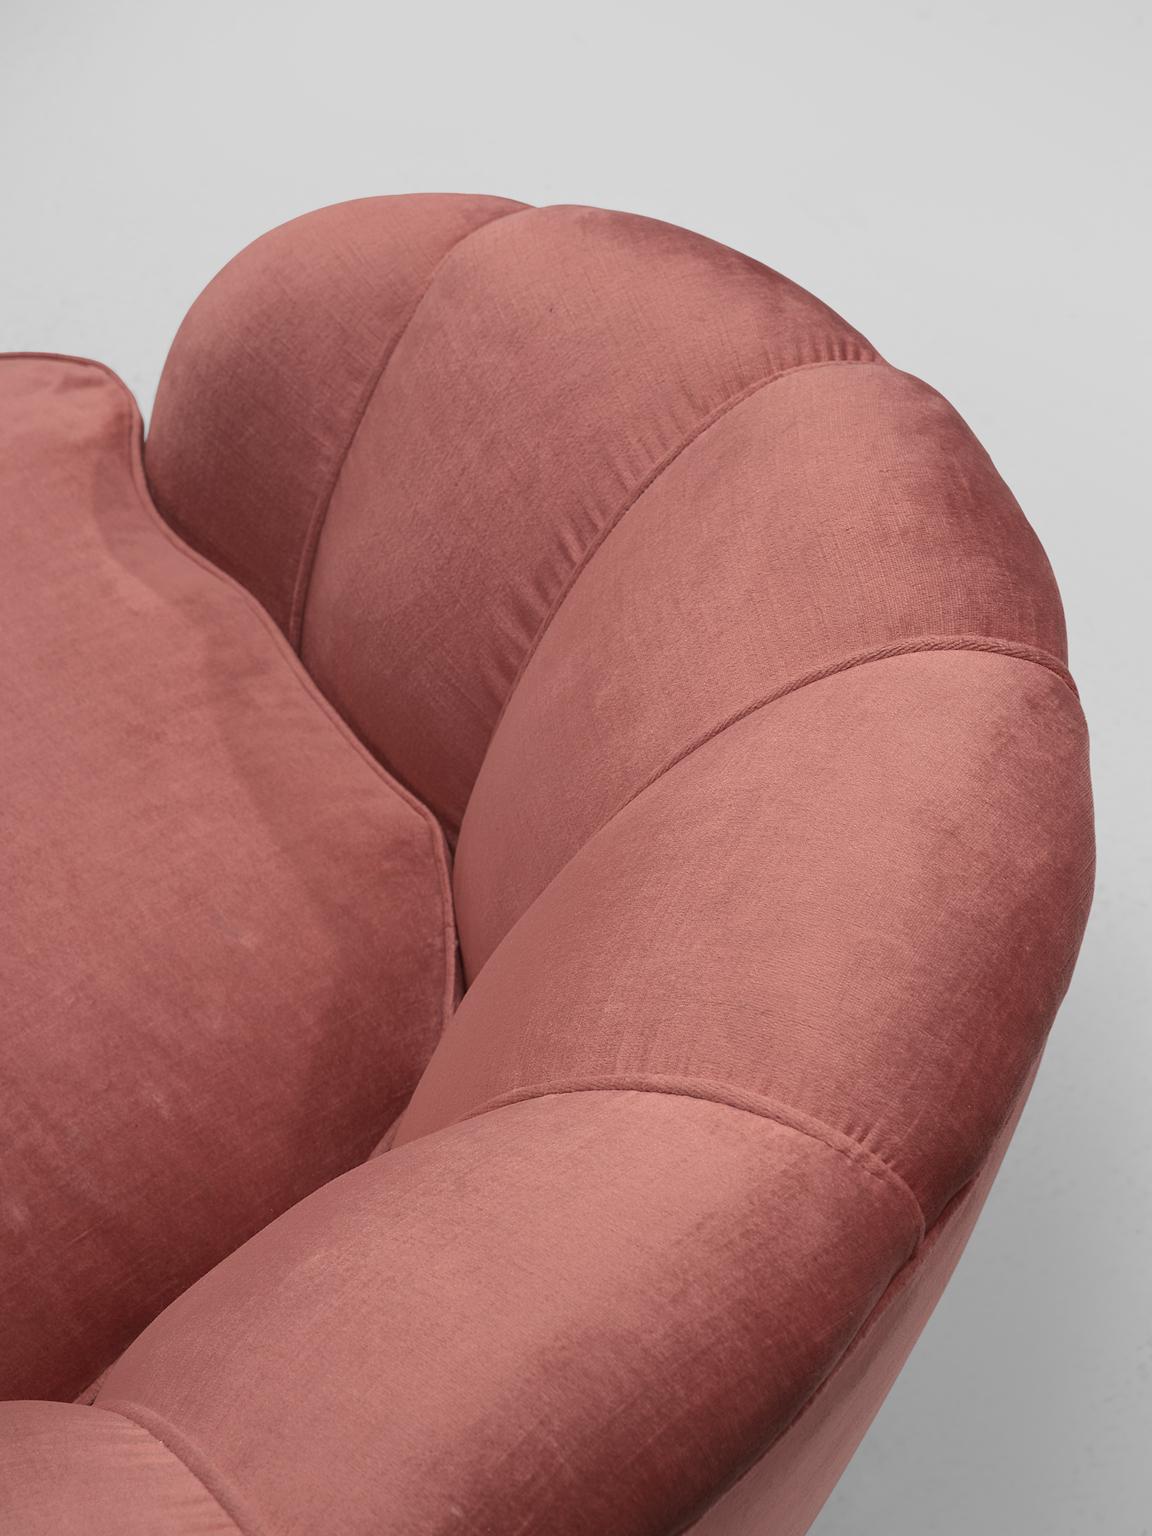 Mid-20th Century Classic Italian Pair of Club Chairs in Pink Velvet